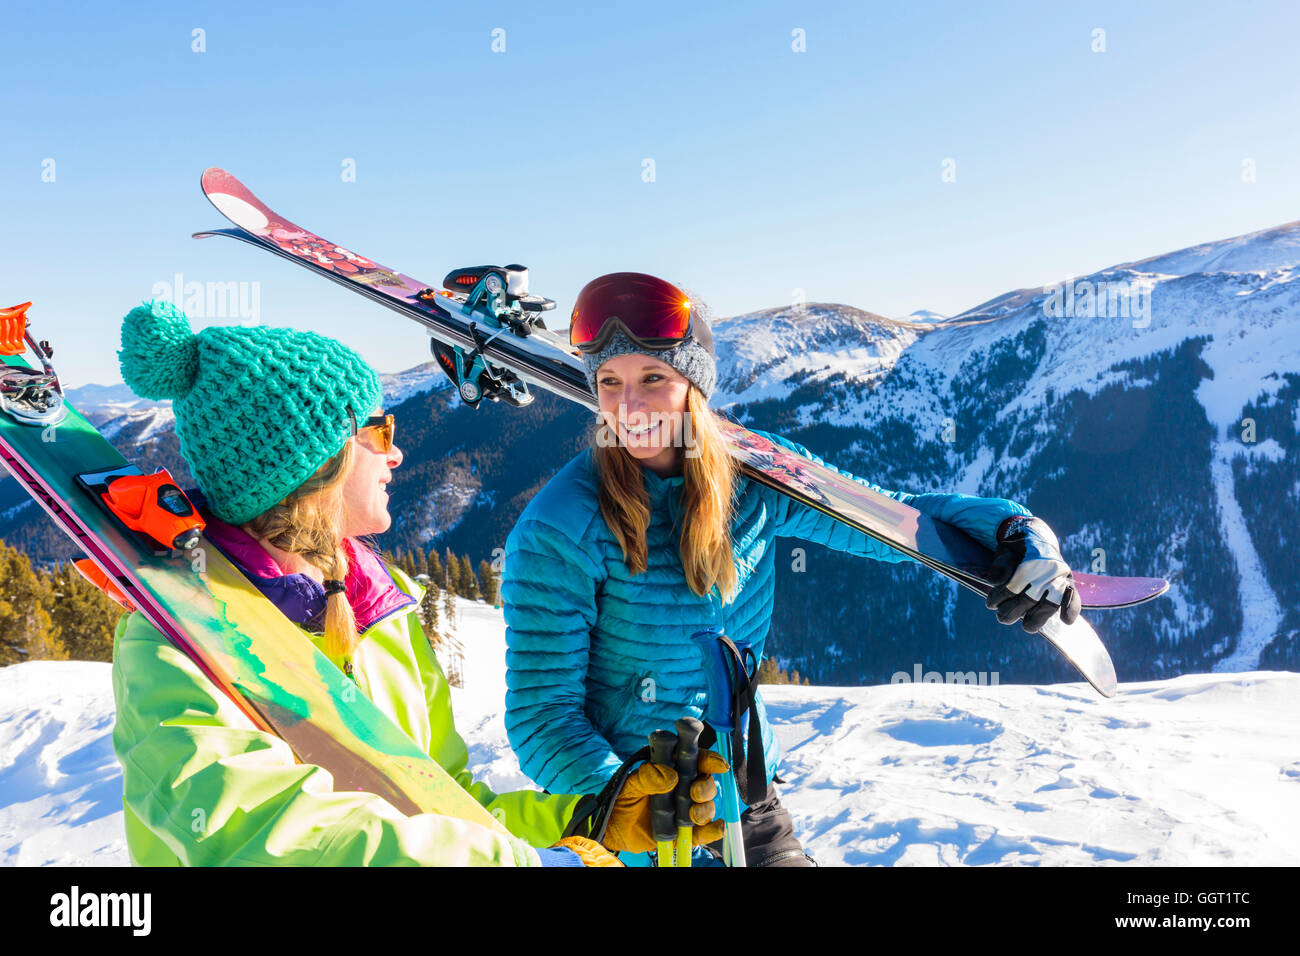 Women carrying skis on snowy mountain Stock Photo